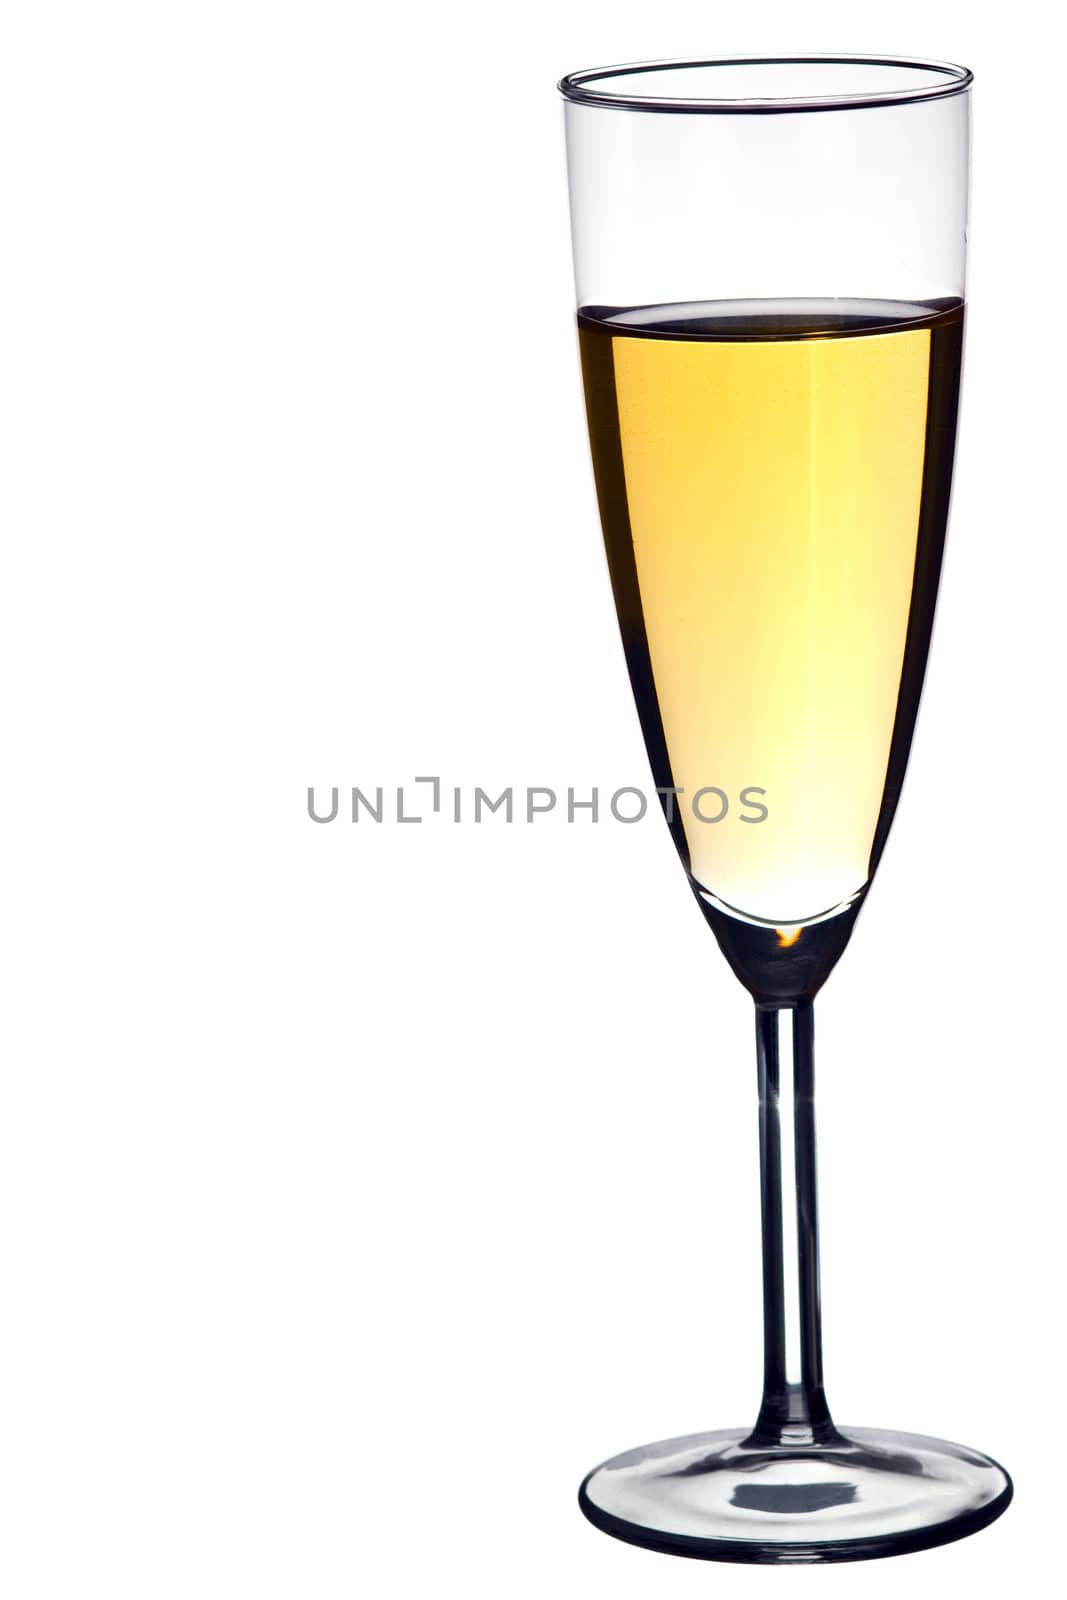 Glass of white wine by Gjermund